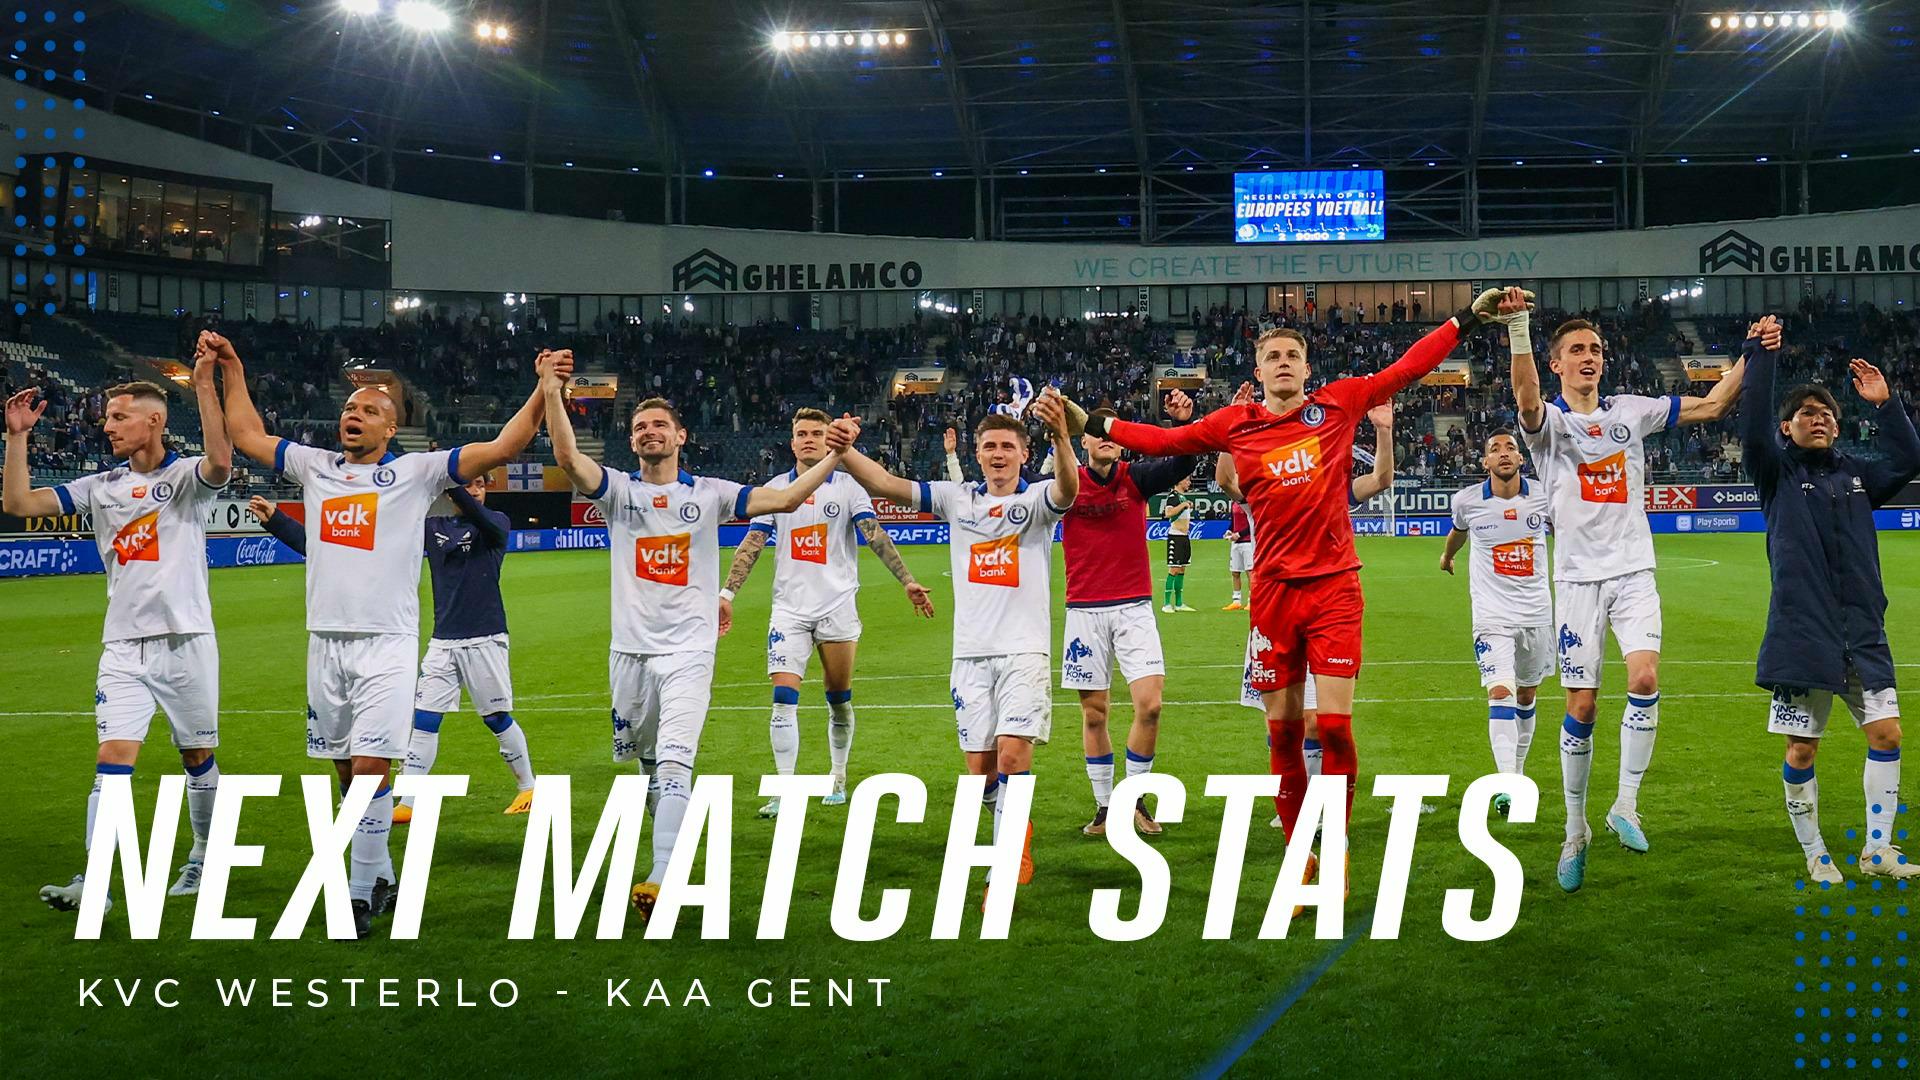 📊 Next Match Stats KVC Westerlo - KAA Gent